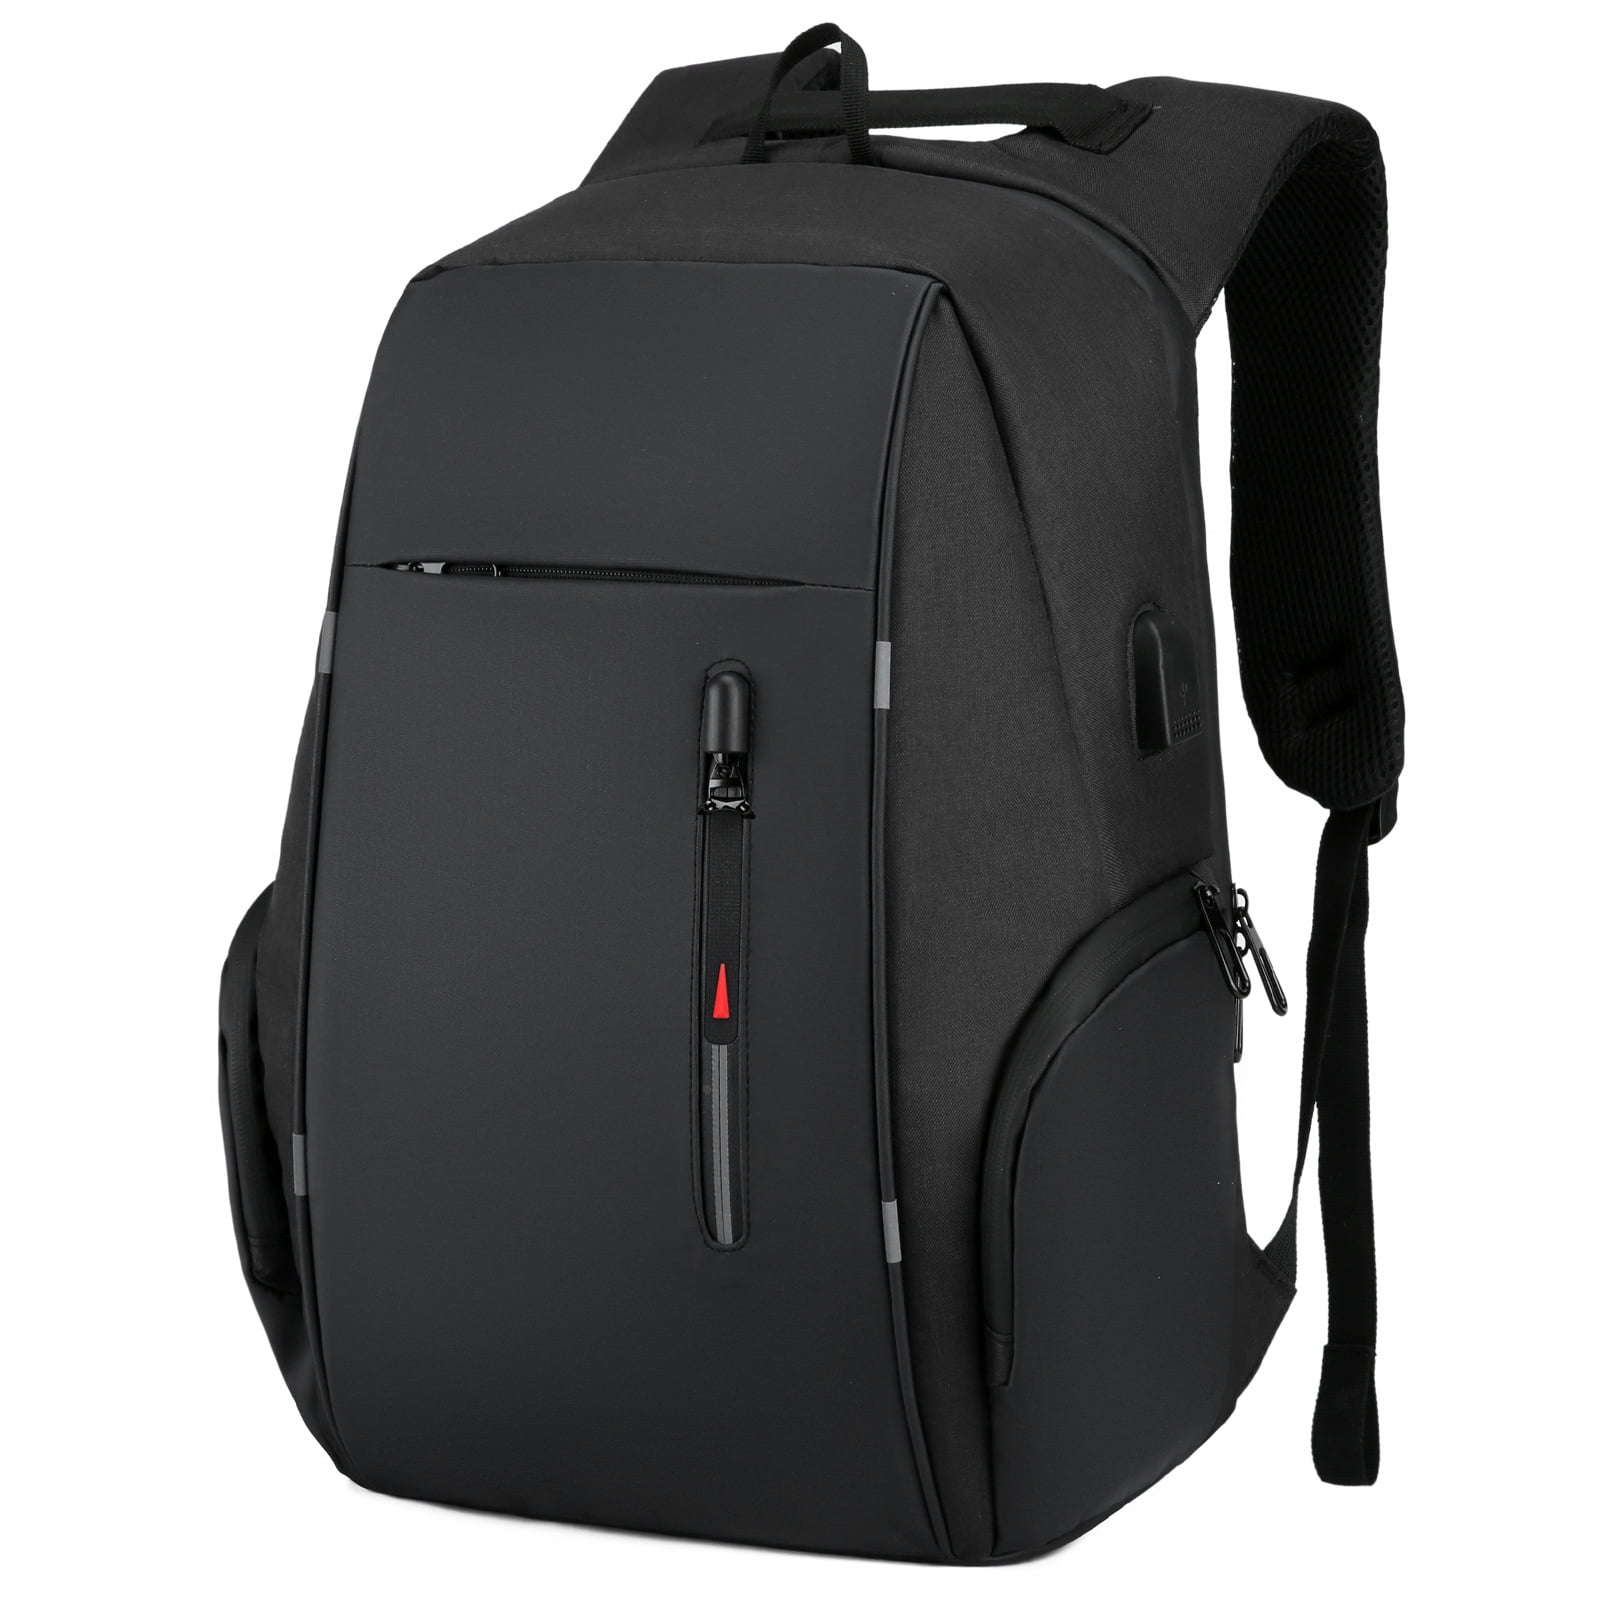 Unisex Laptop Backpack Rucksack Shoulders School Bookbag Men Women Travel Bags 